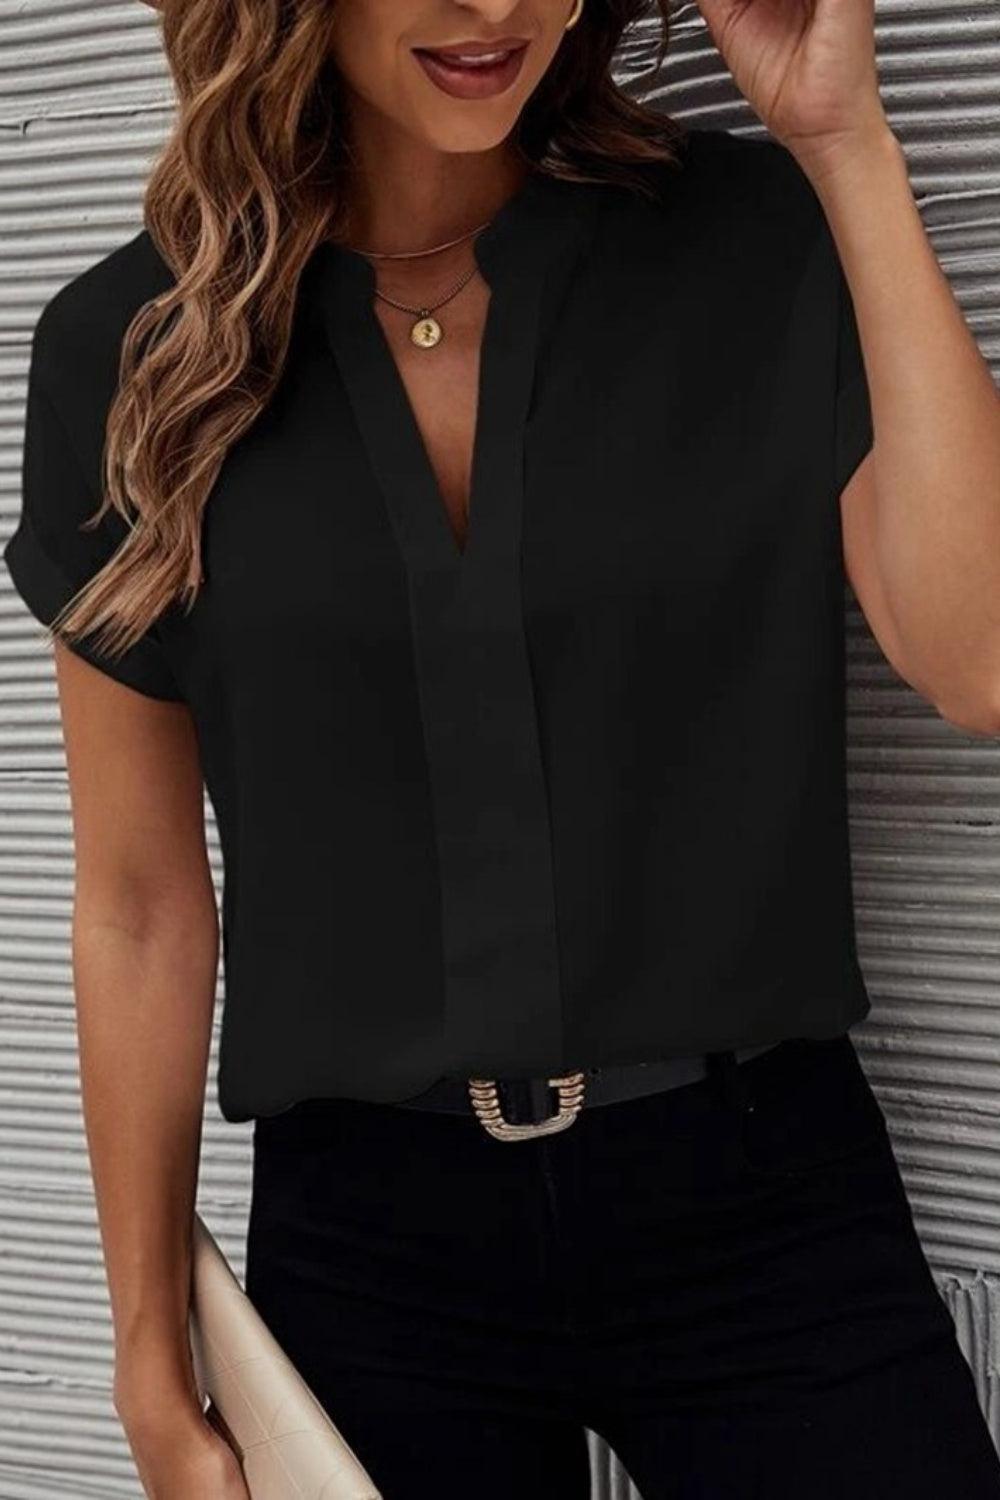 a woman wearing a black shirt and black pants